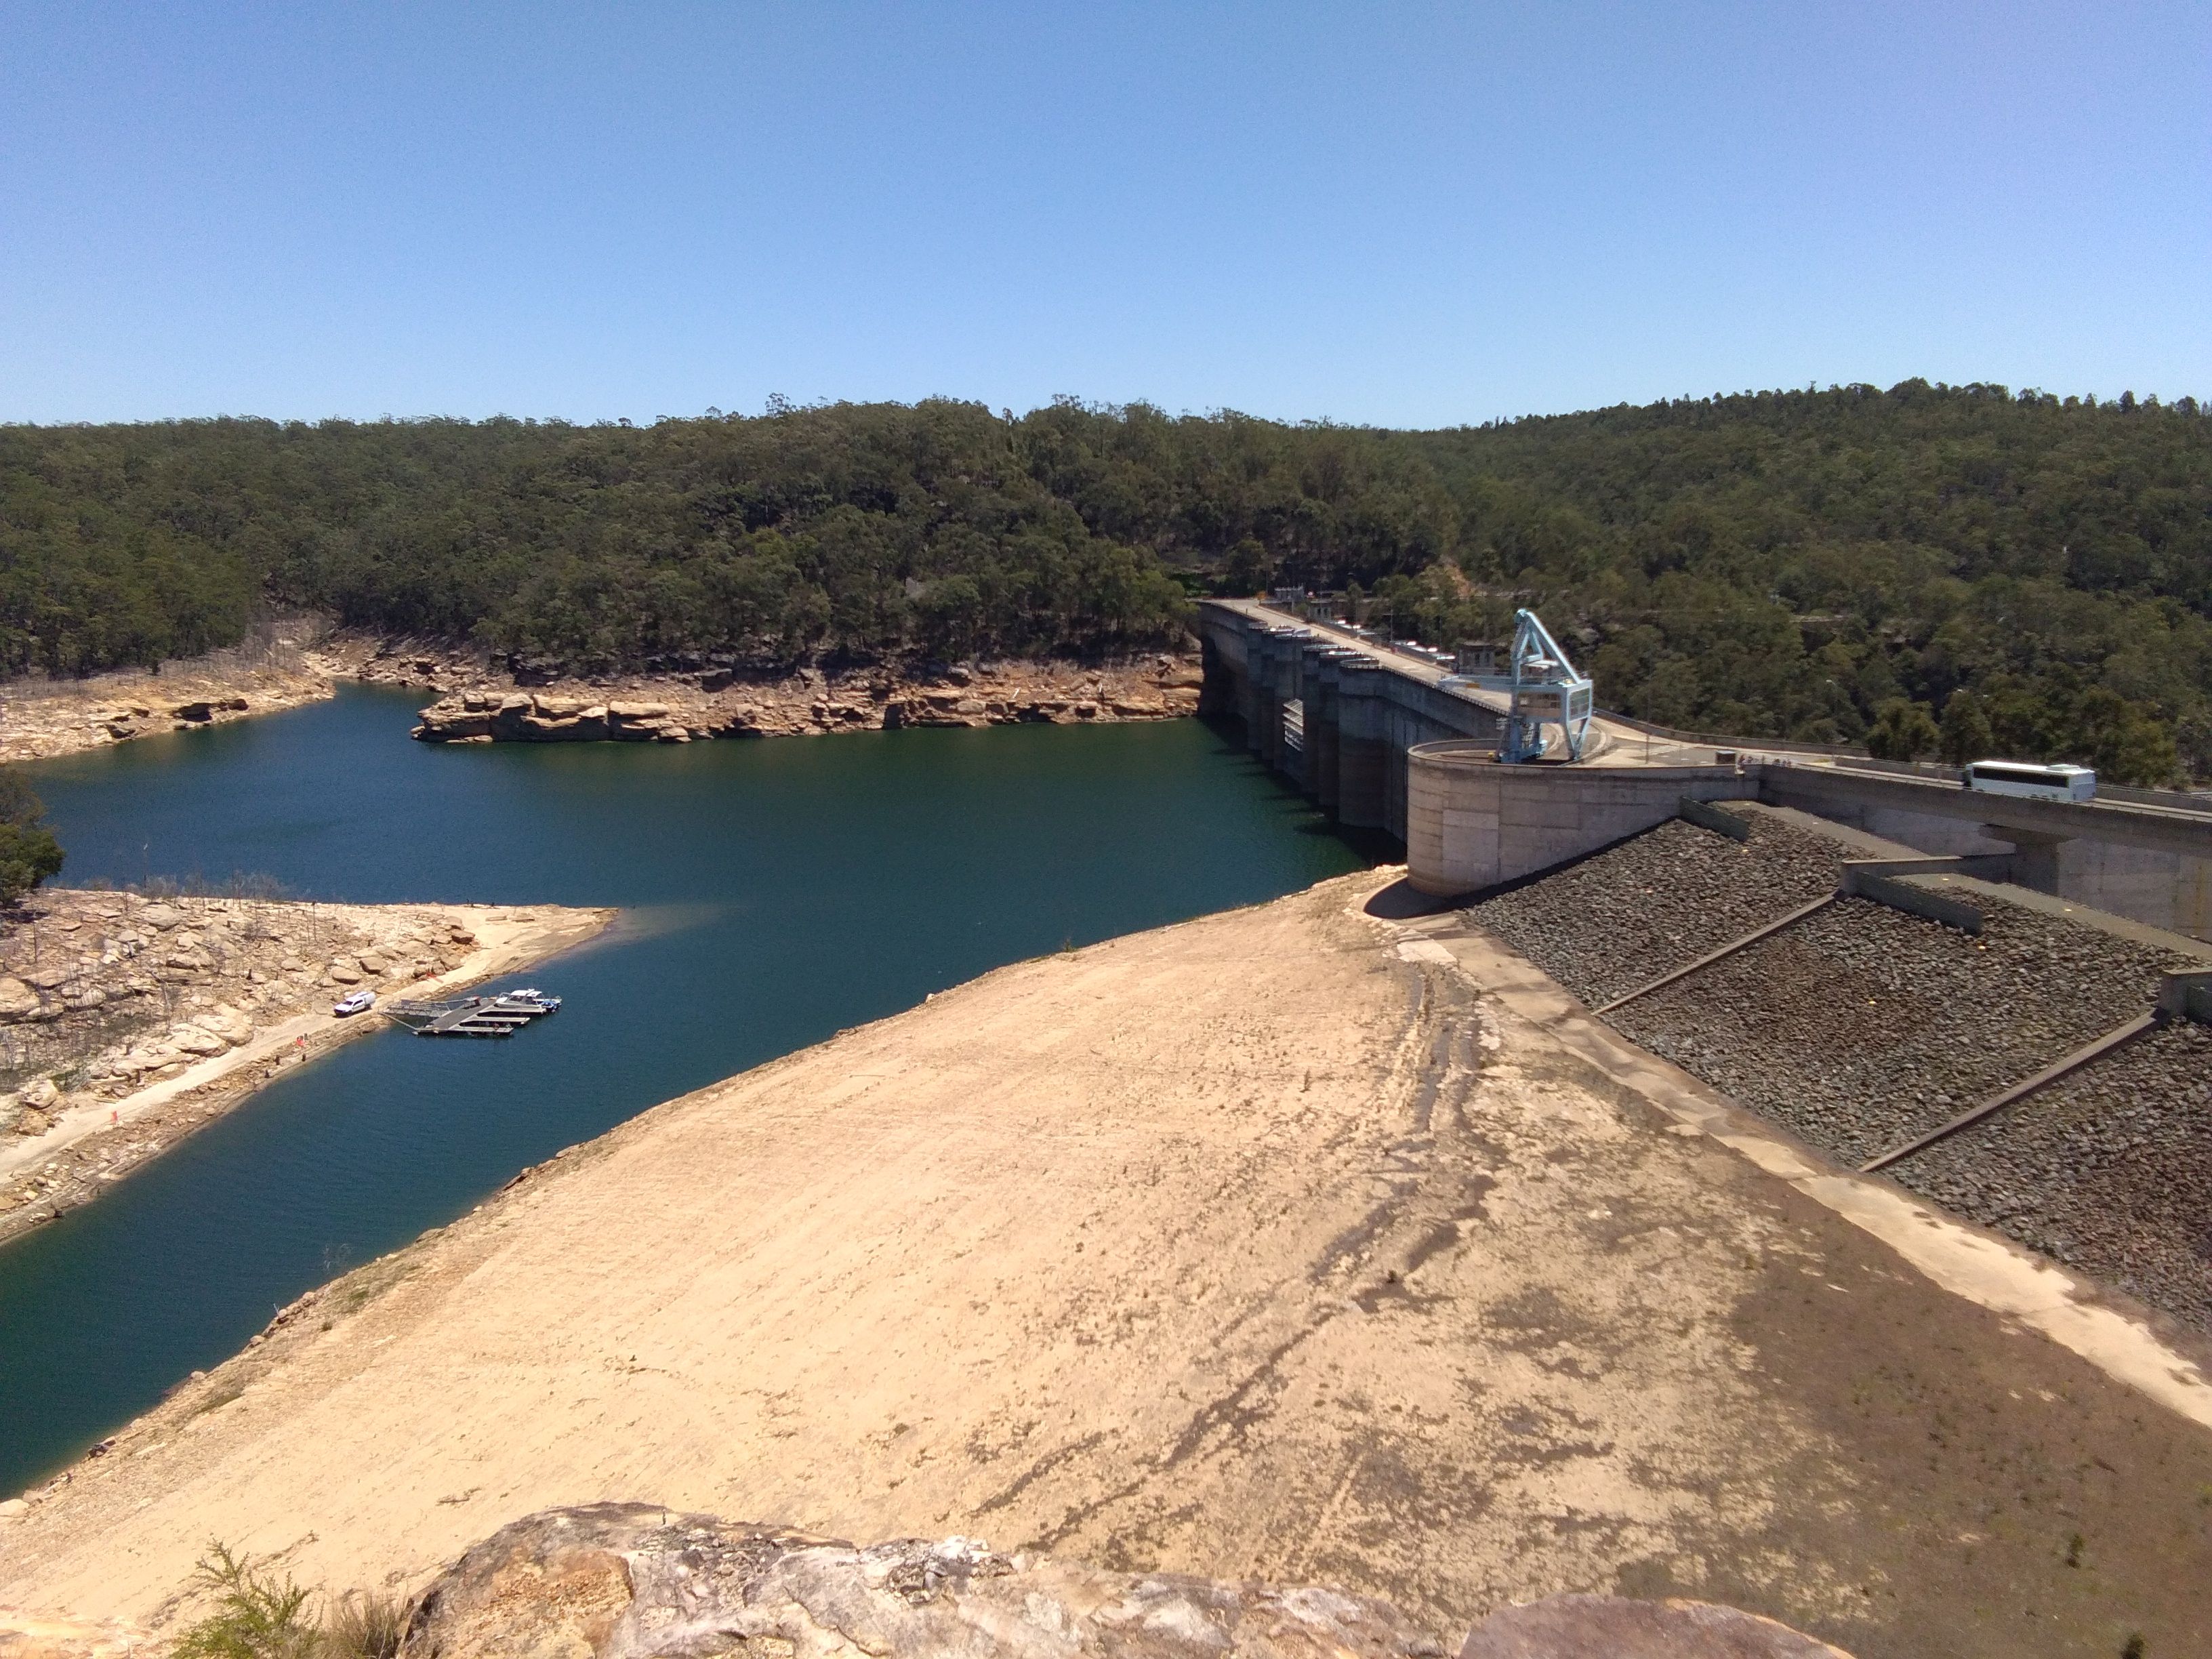 Warragamba Dam: Whose Backyard is this?